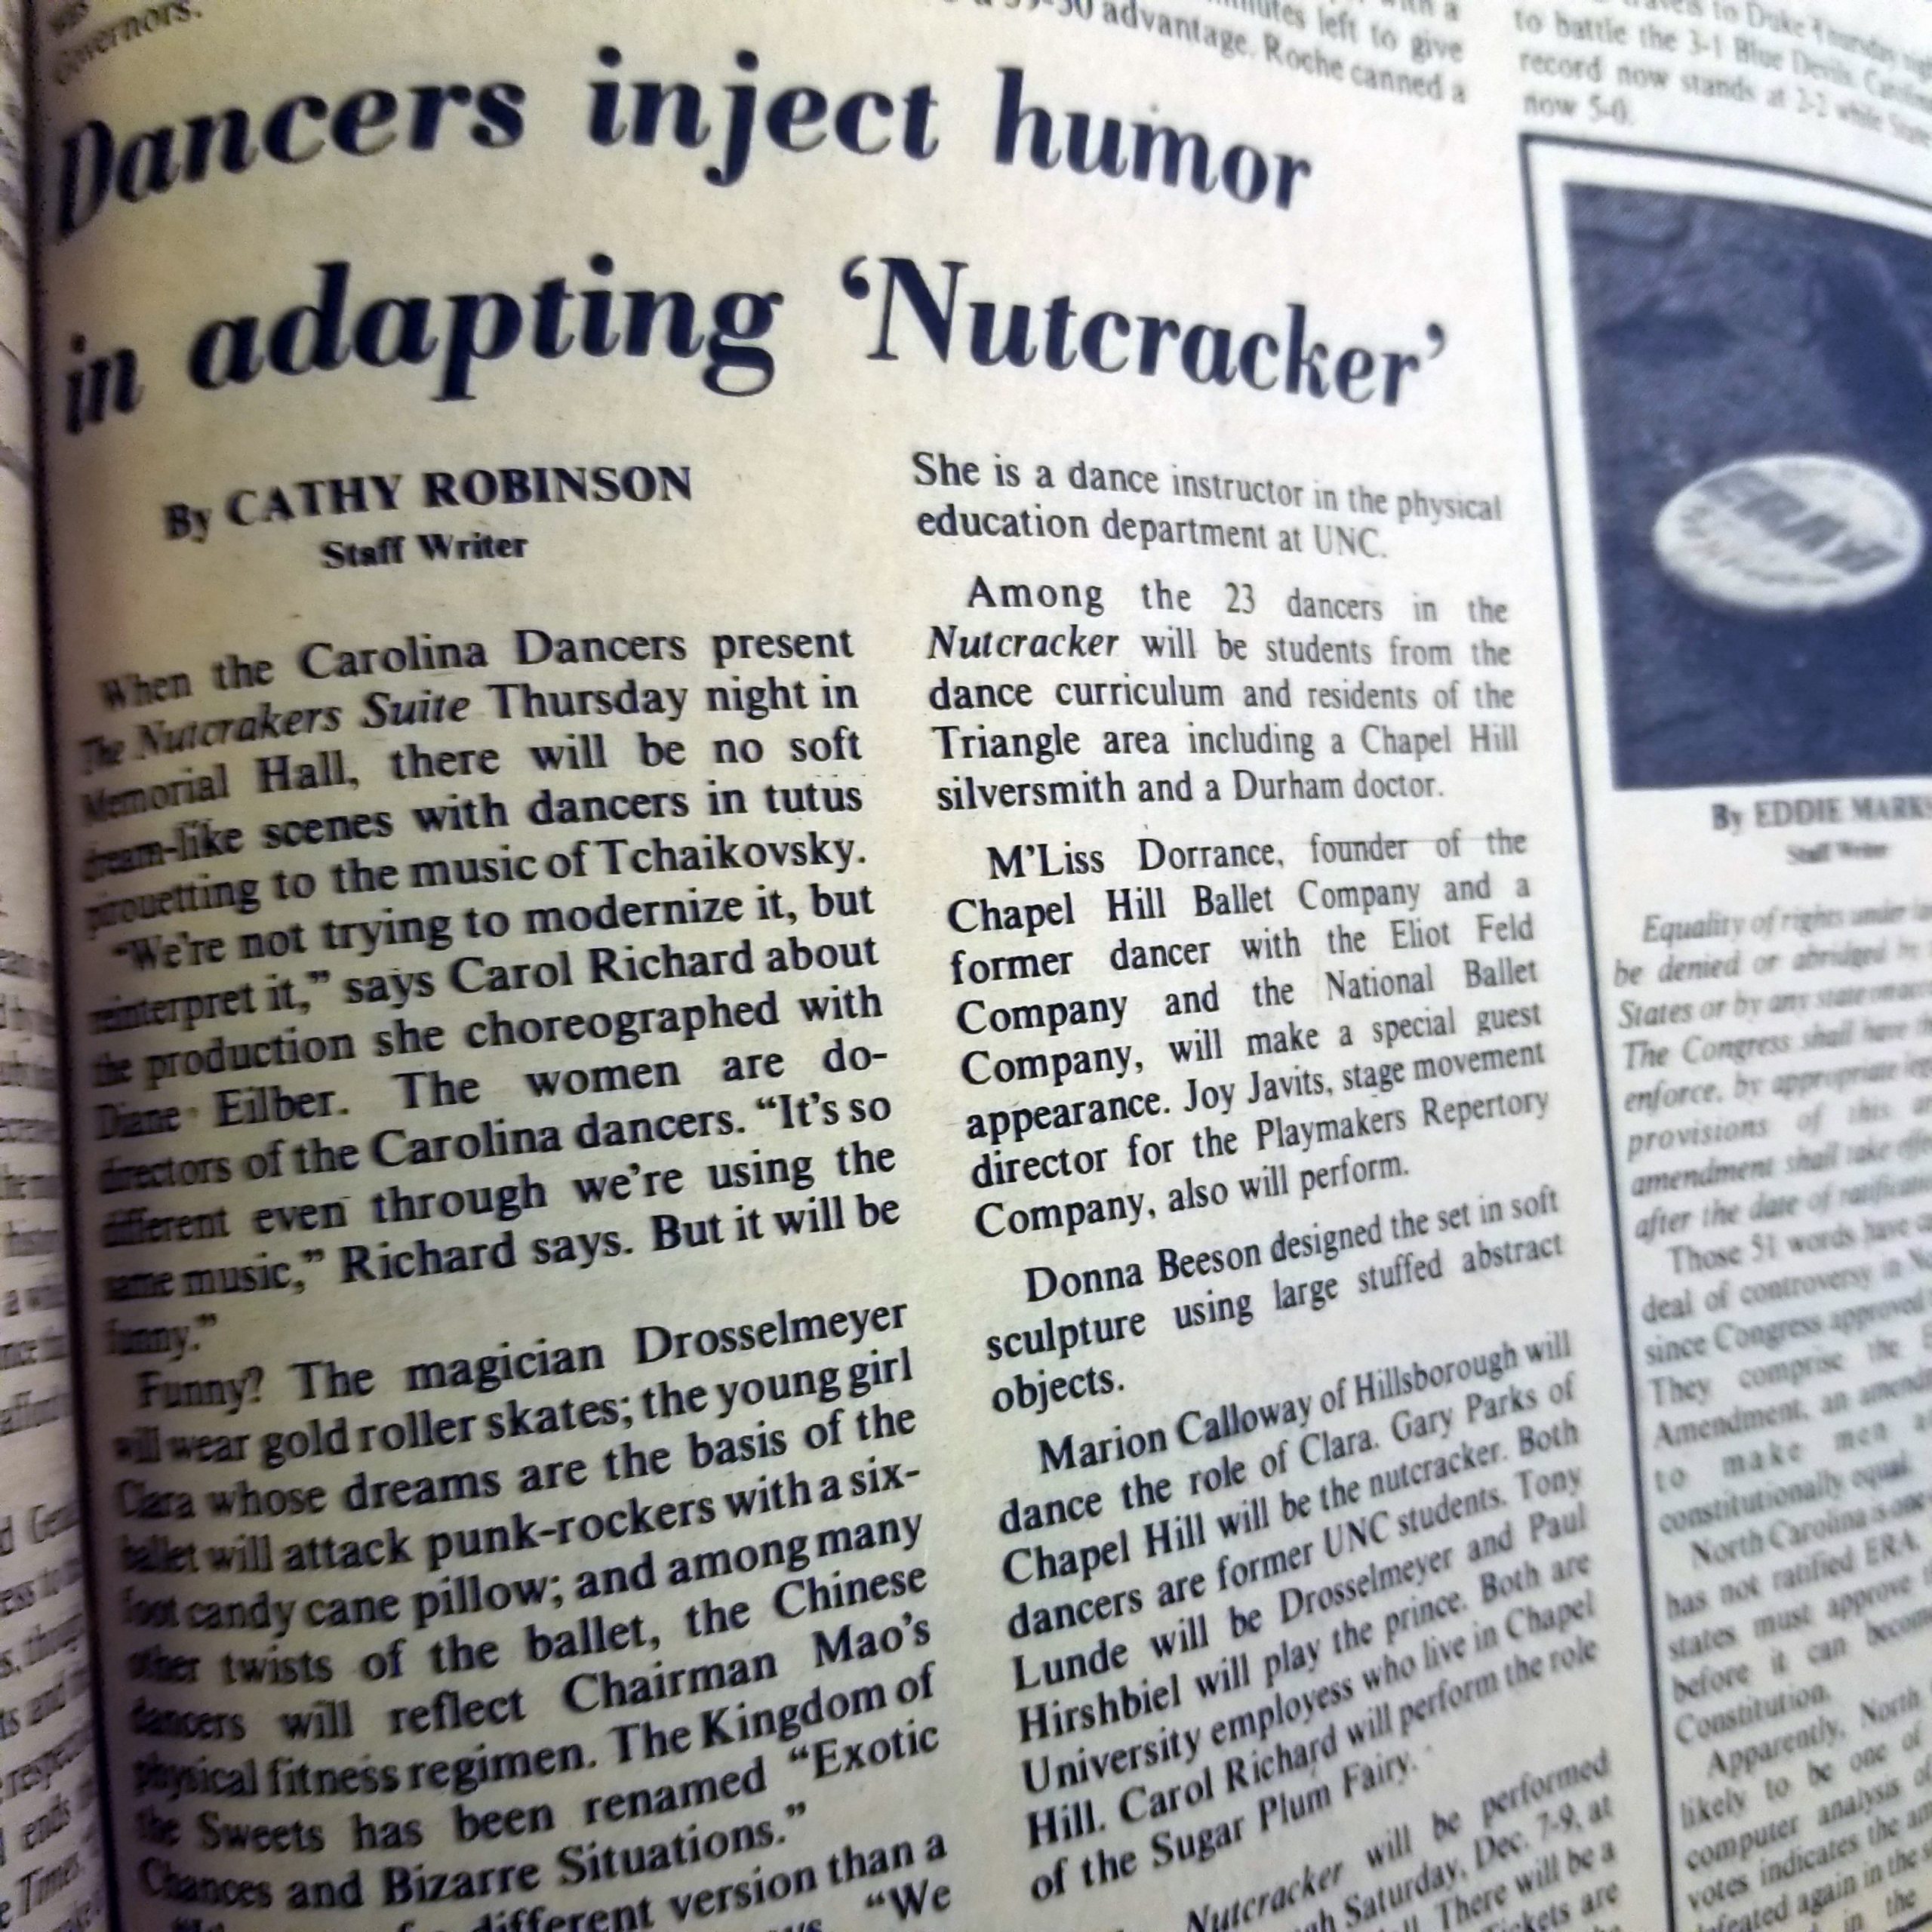 Headline from Daily Tar Heel, "Dancers inject humor in adapting Nutcracker"